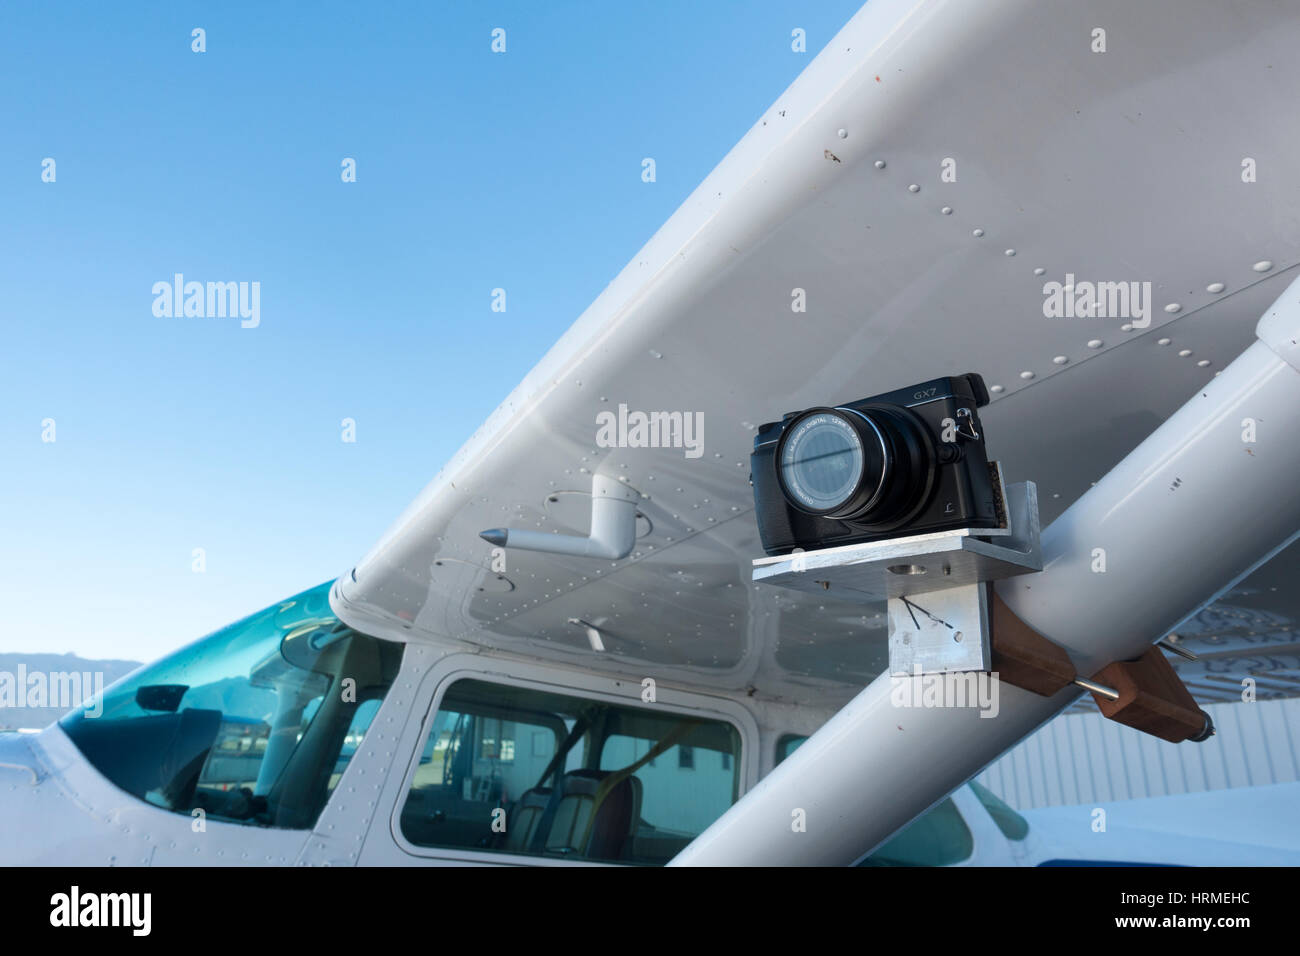 Camera mounted on strut of plane Stock Photo